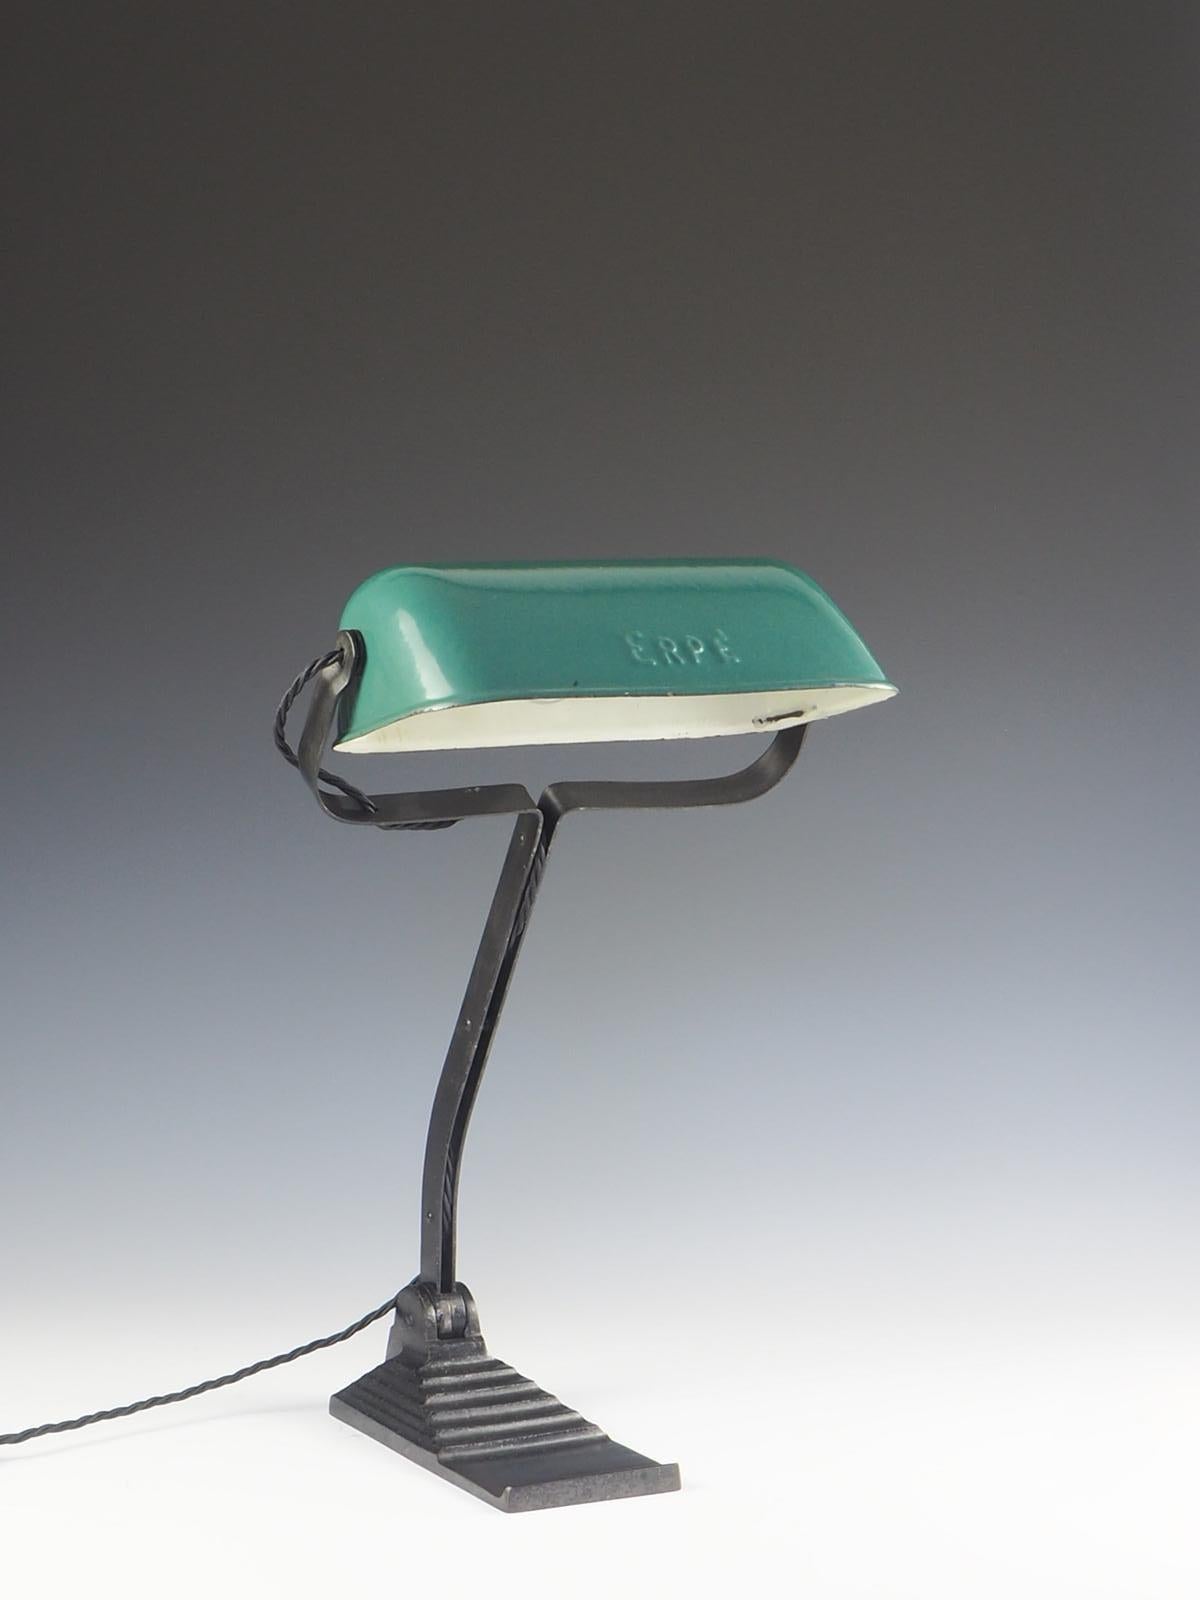 Superb original 1930's desk lamp marked Erpe to the enamel shade.

Belgium, 1930's.